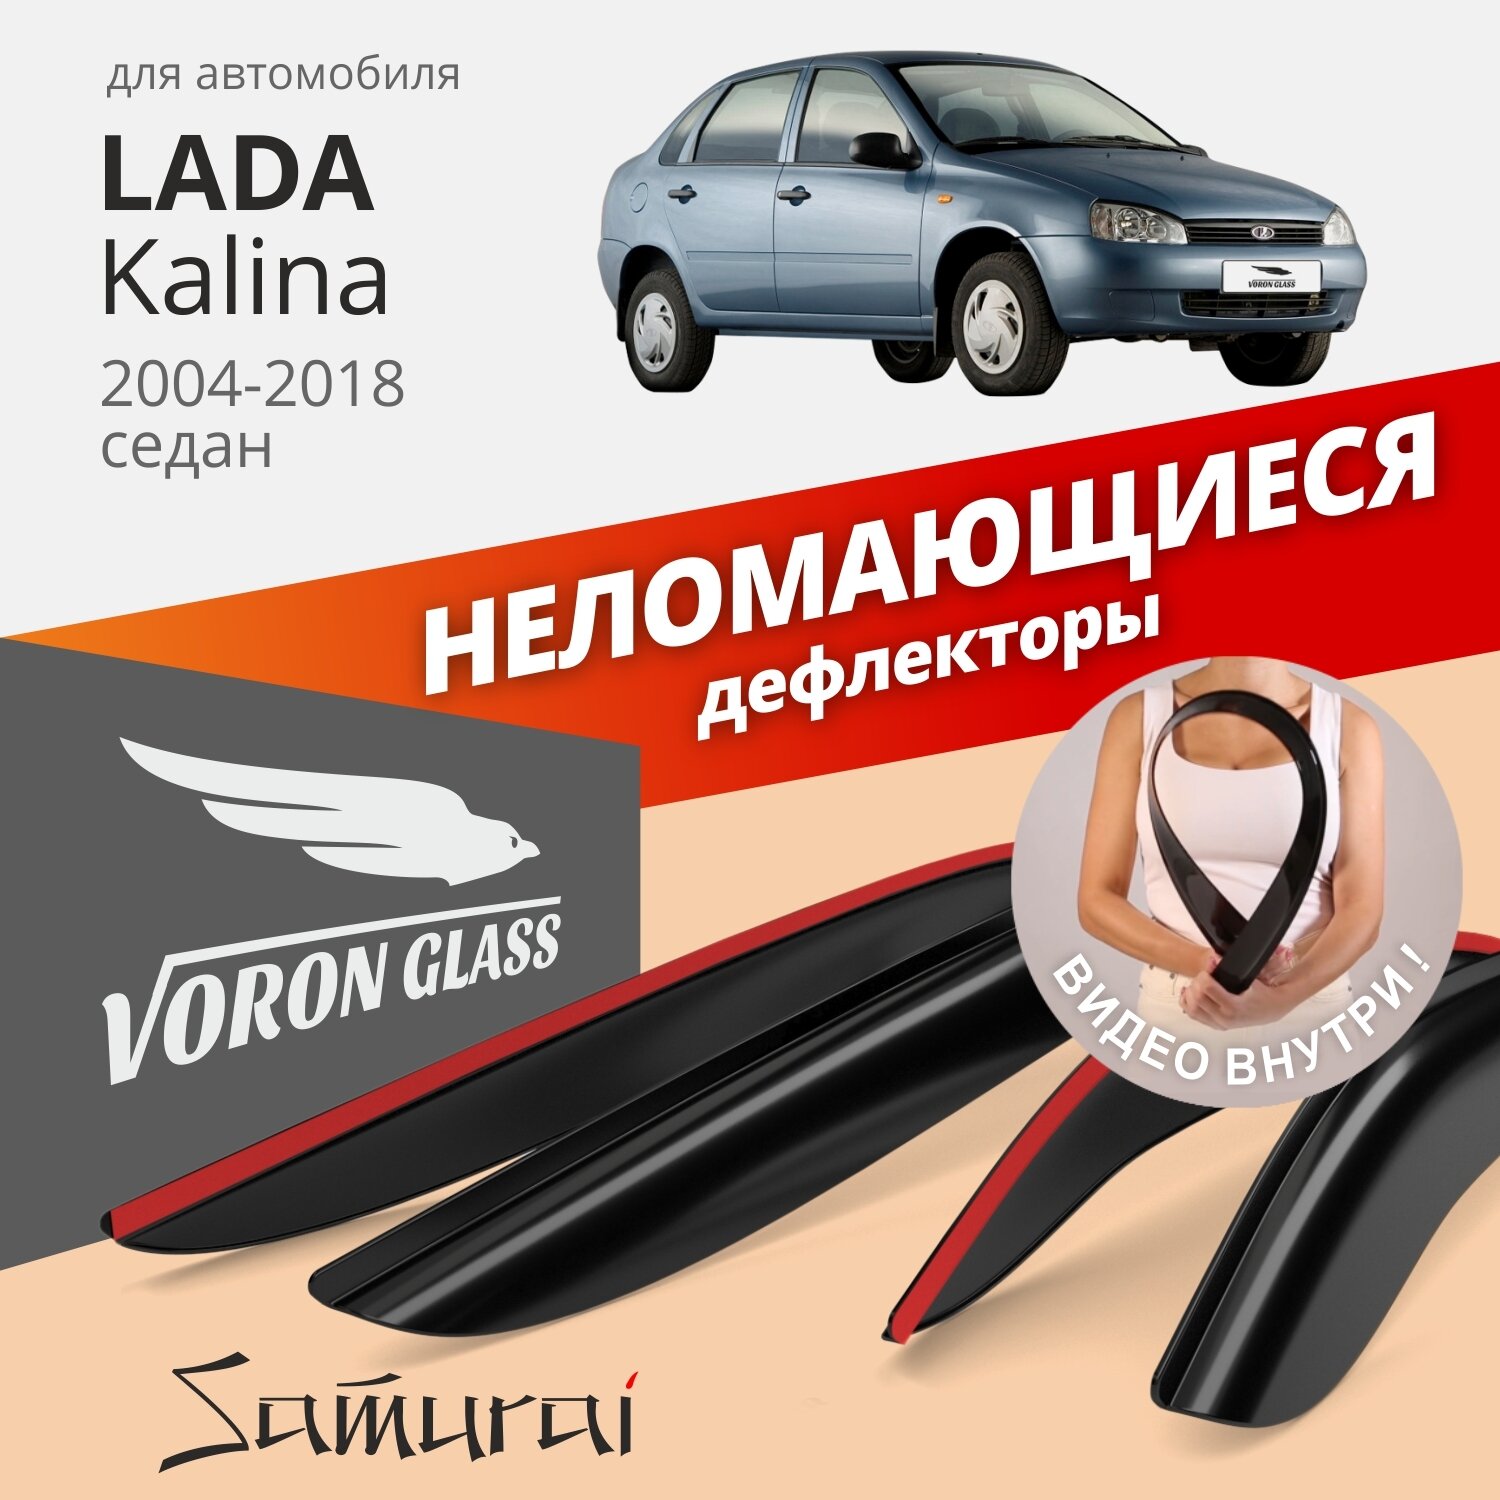 Дефлектор окон Voron Glass DEF00291 для LADA Kalina